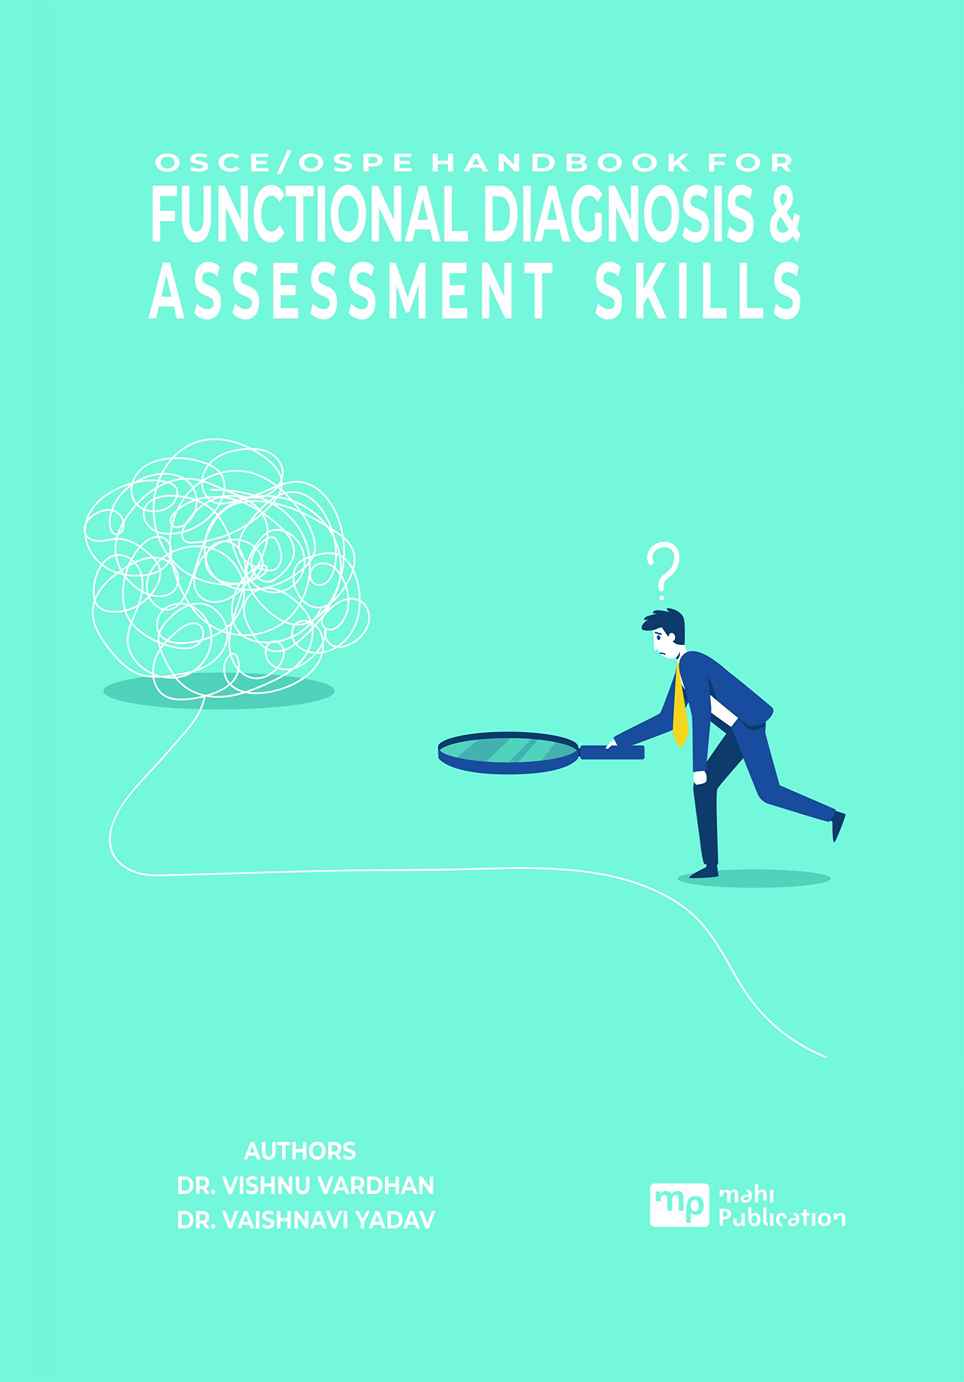 OSCE/OSPE Handbook for Functional Diagnosis & Assessment Skills